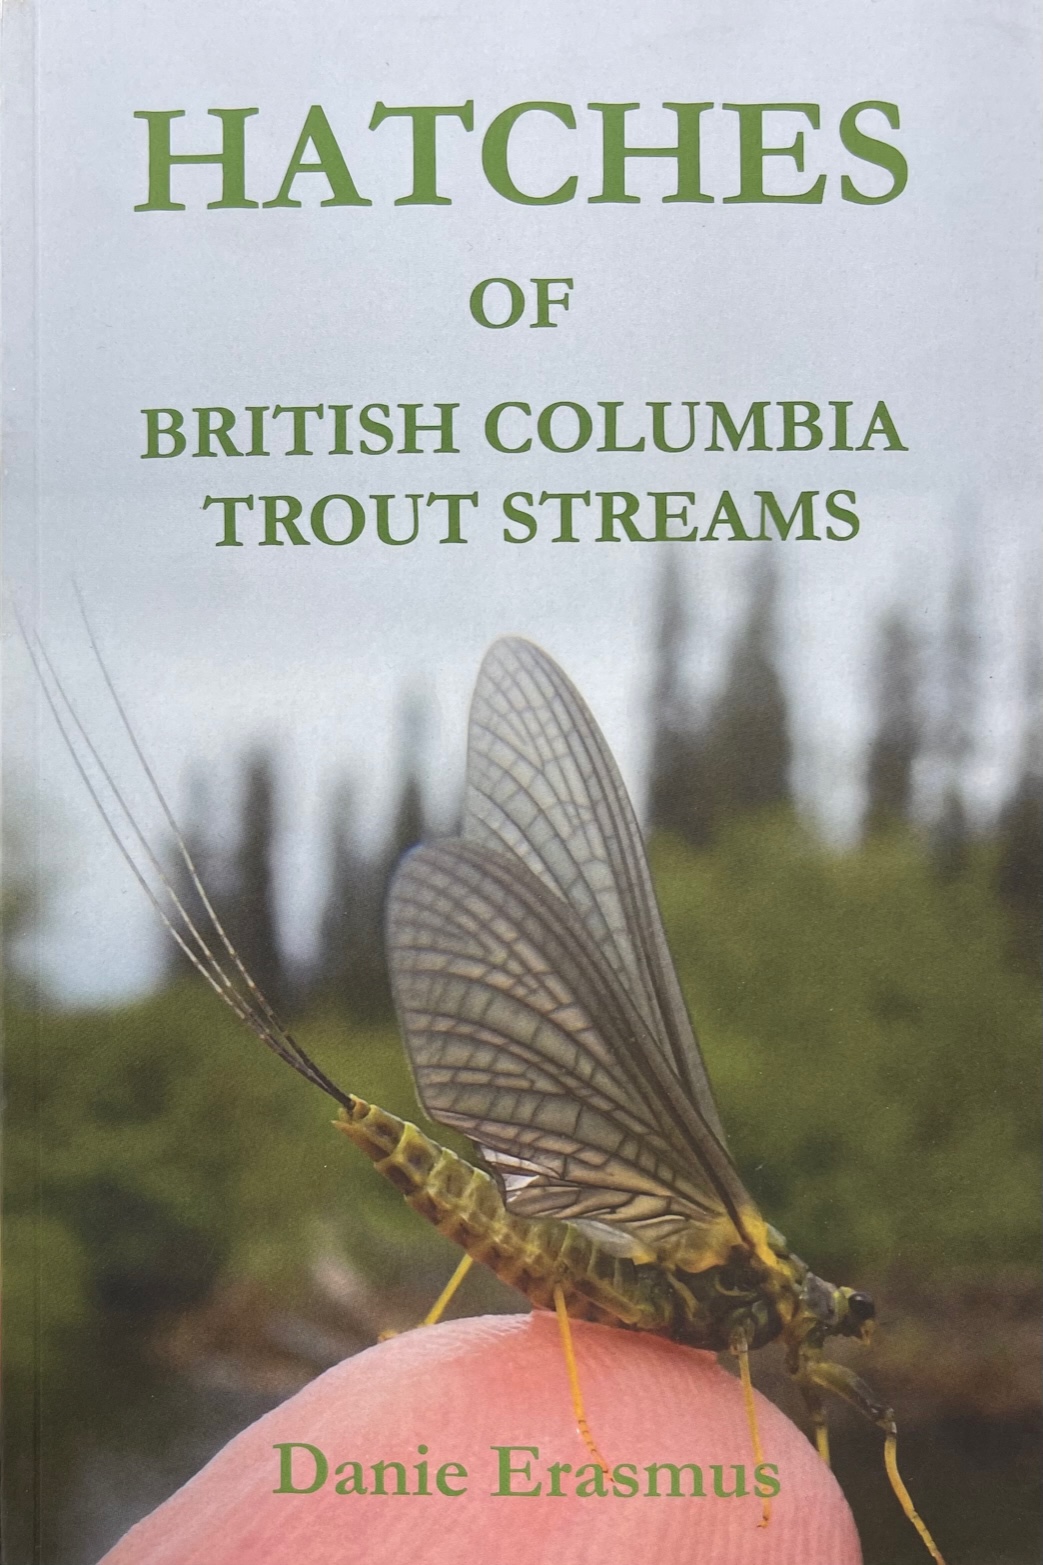 Hatches of British Columbia Trout Streams - by Danie Erasmus